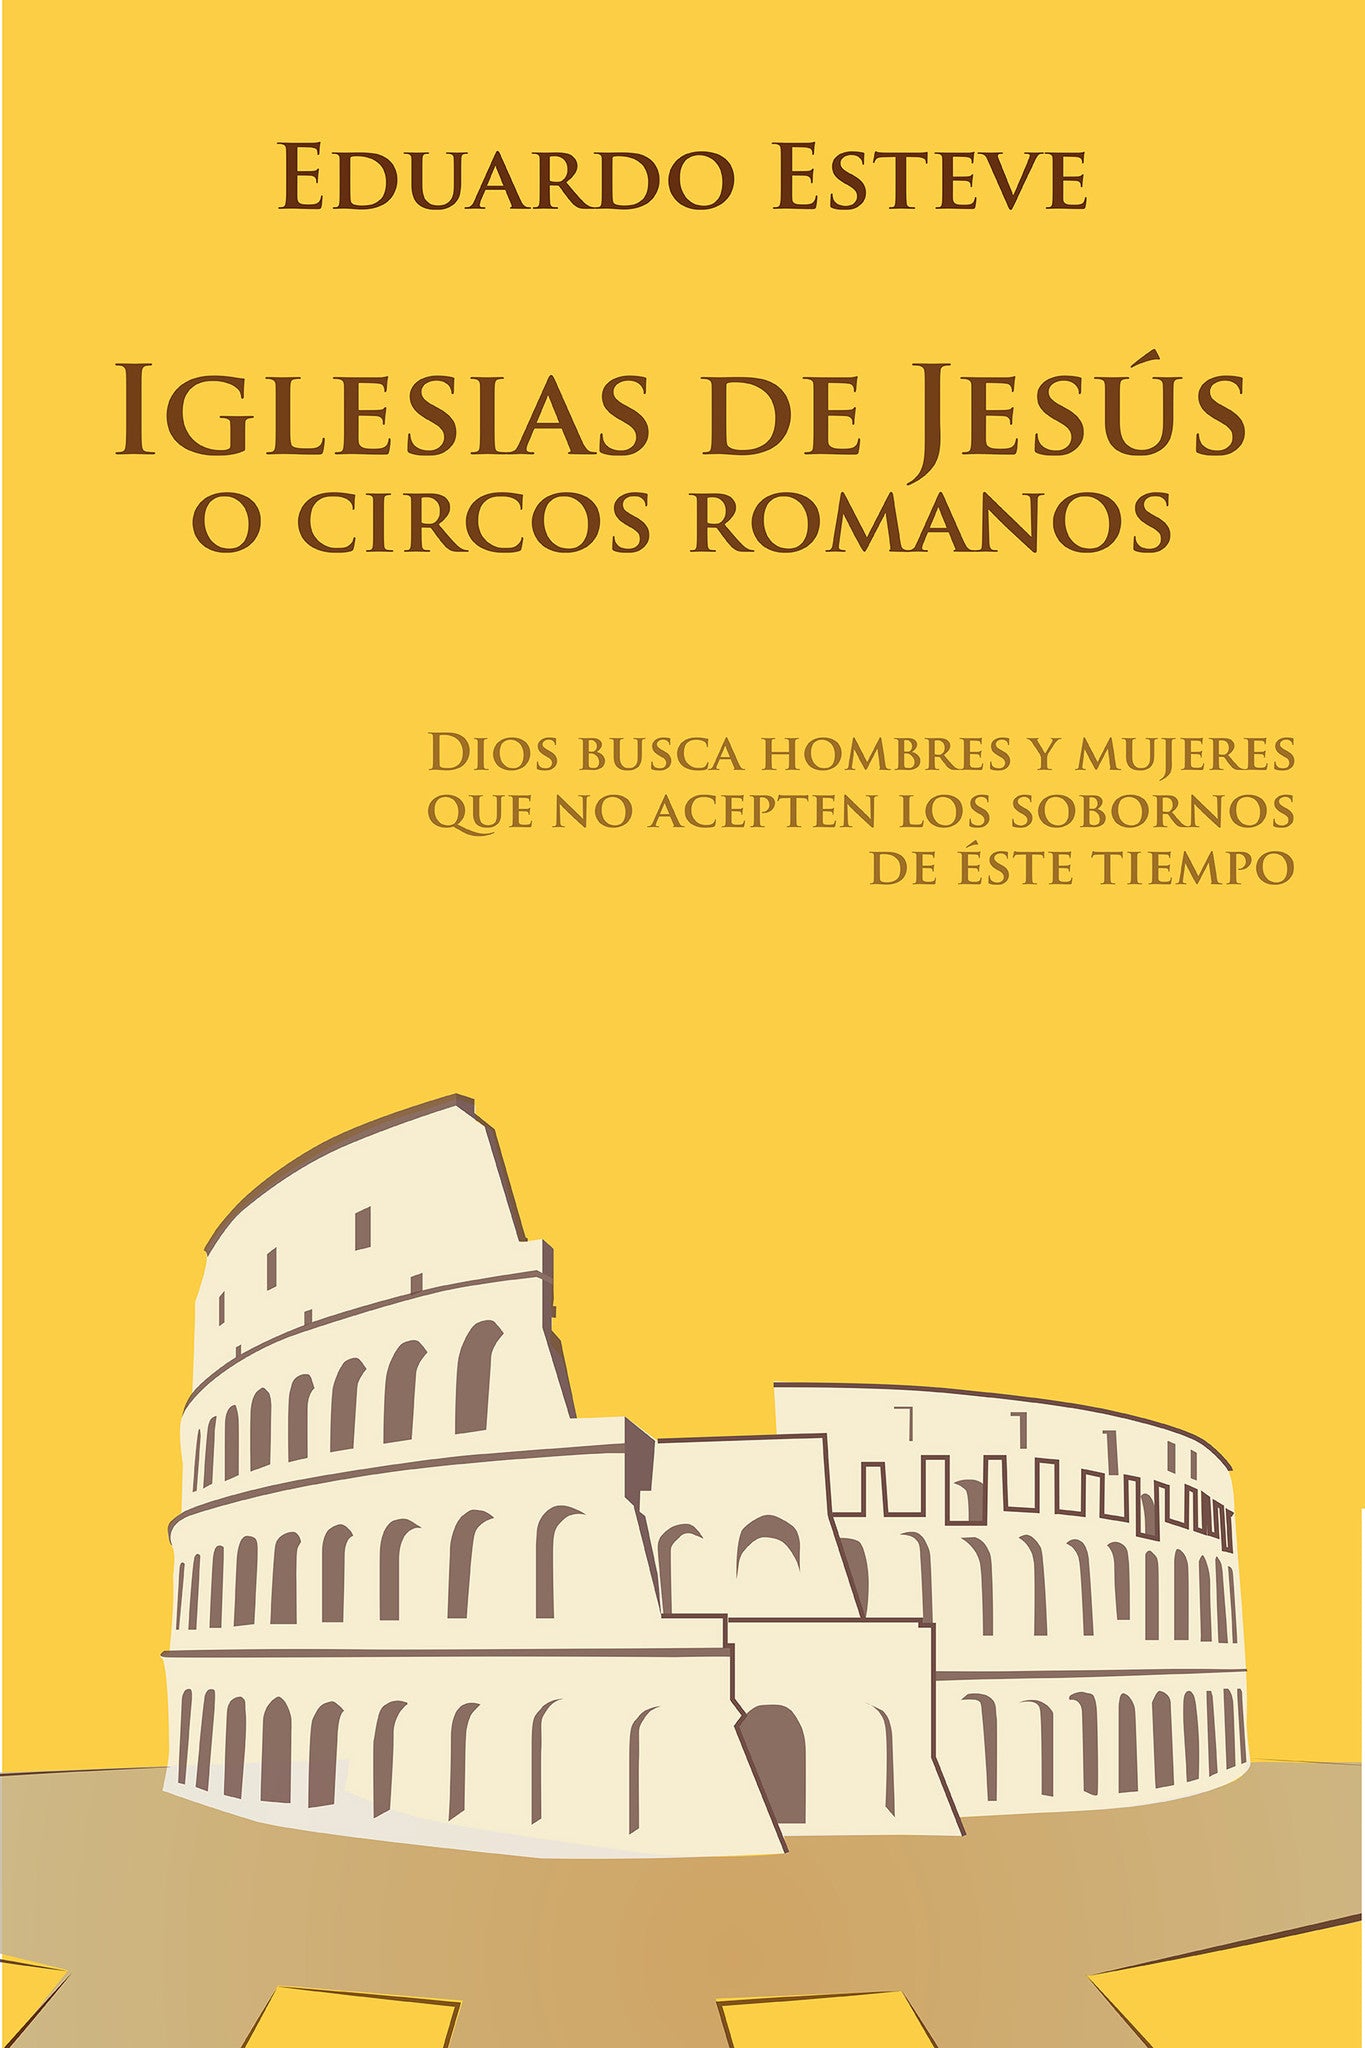 Iglesias de Jesús o Circos Romanos - ibukku, LLC